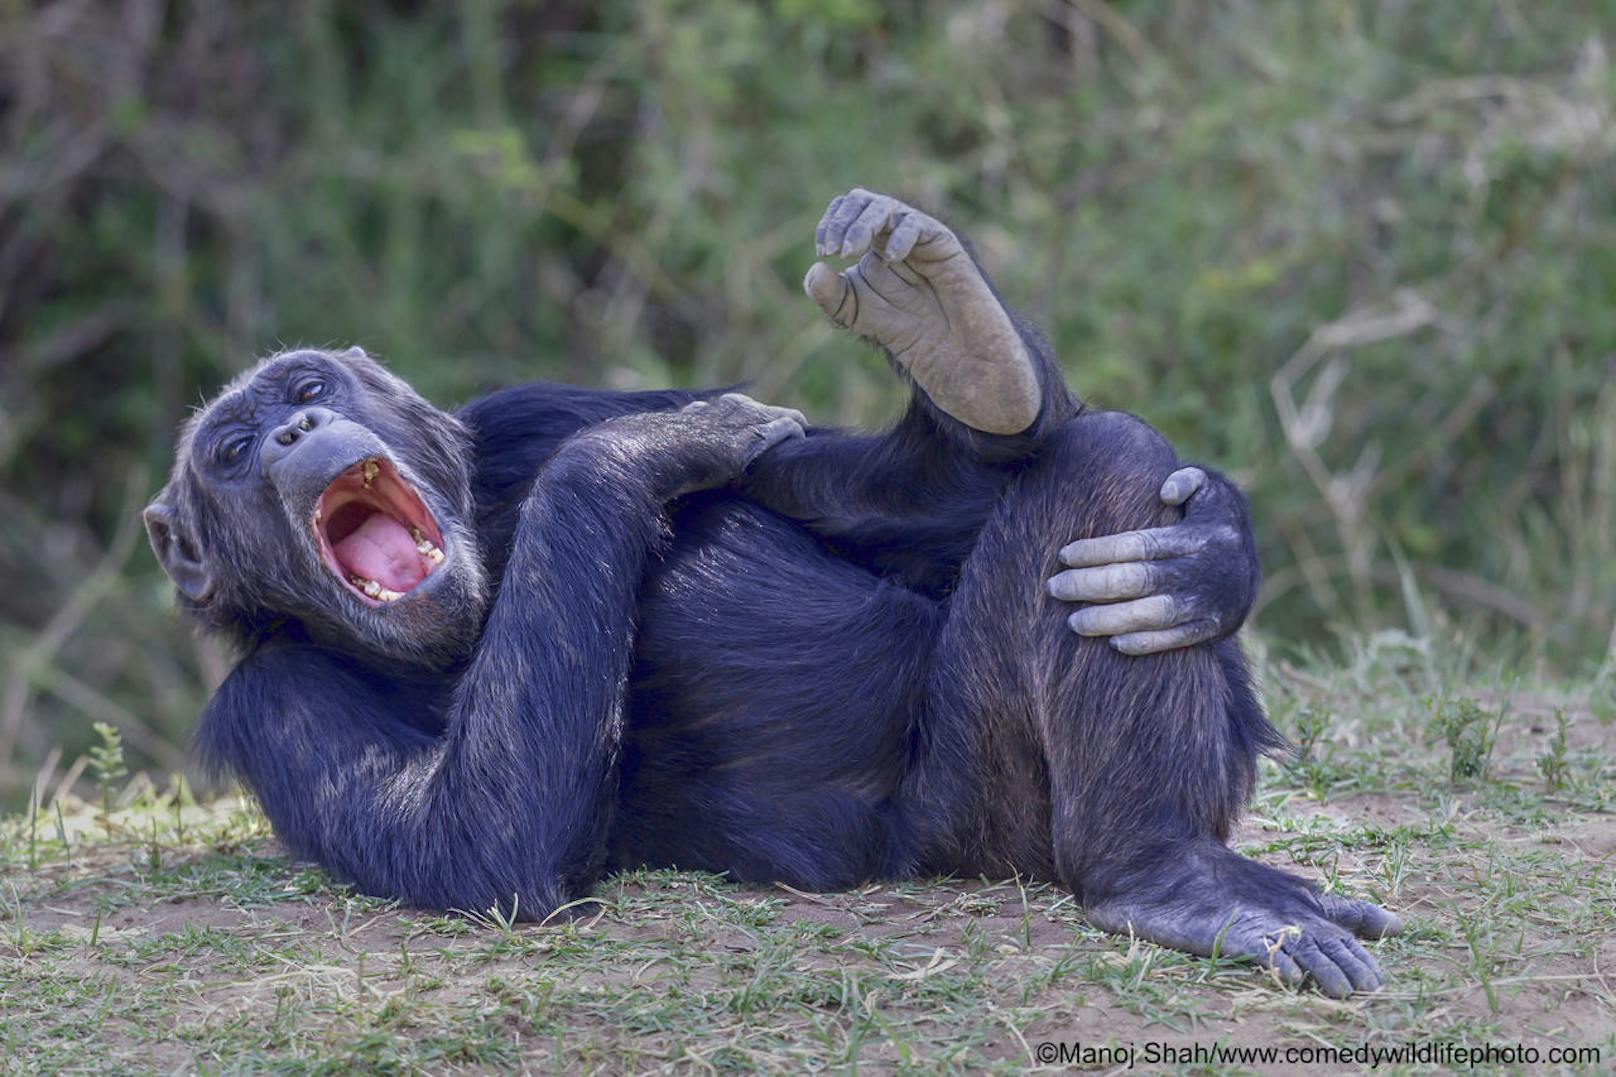 <b>"HAHAHAHAHHAHAHAHHAHAHAHAHAHA" - typische Pose eines hysterisch lachenden Chimpansen</b>

"The hysterics!" von Manoj and Shah
Ort: Kenia